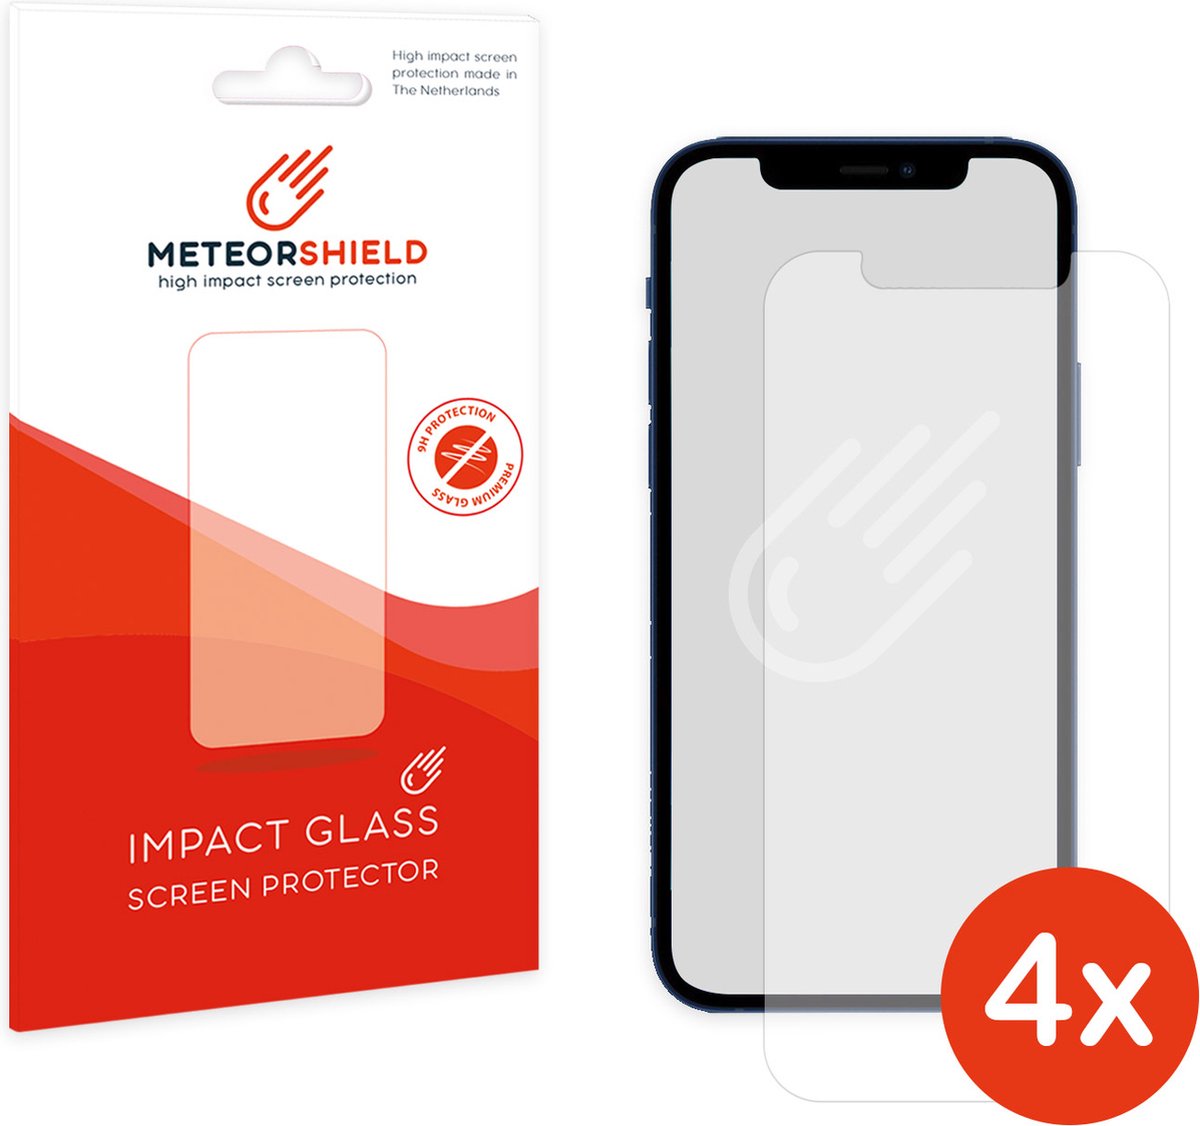 4 stuks: Meteorshield iPhone 12 screenprotector - Ultra clear impact glass